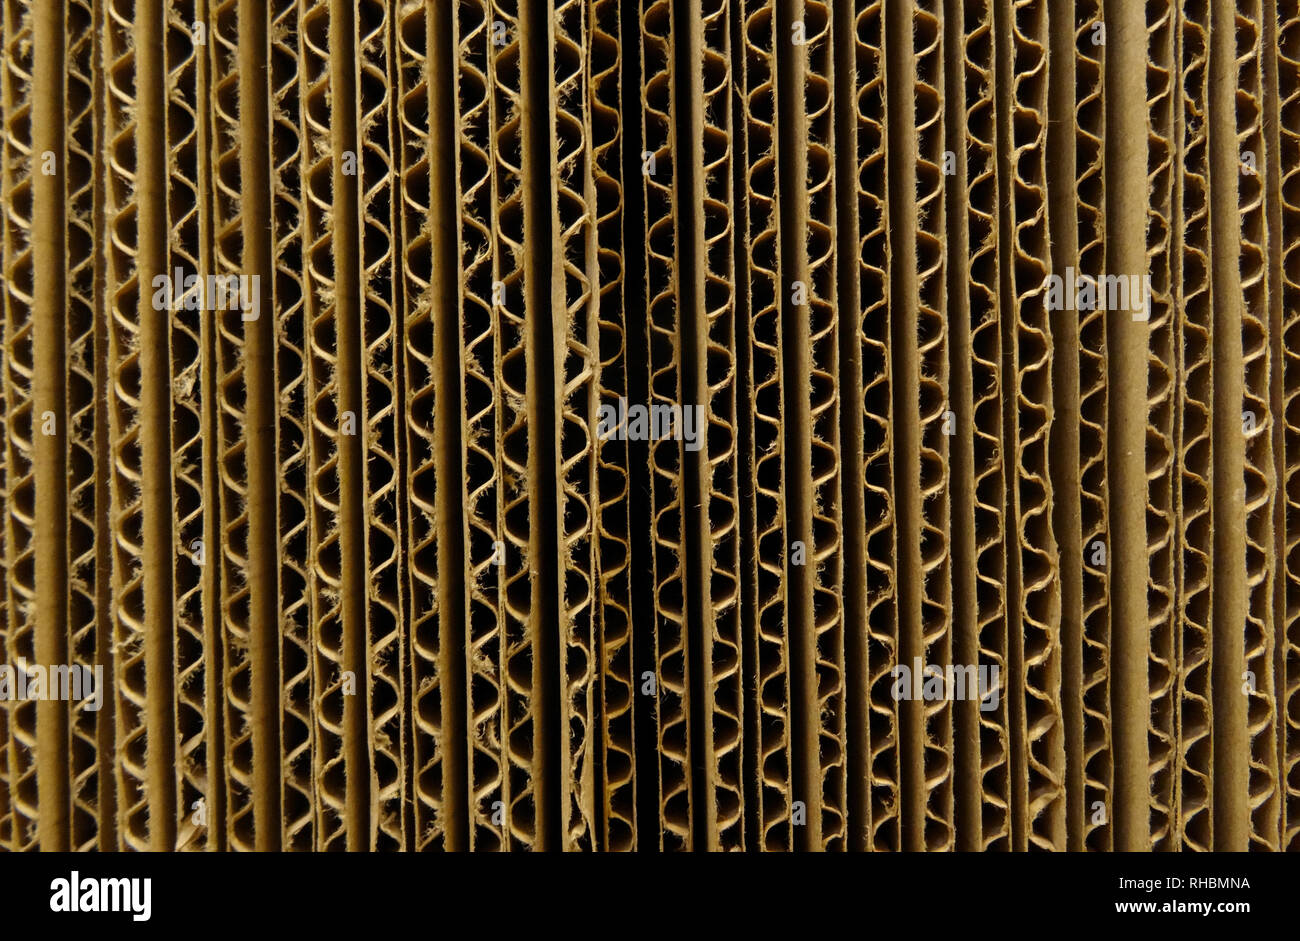 Packaging materials. Corrugated cardboard sheets closeup stock photo Stock Photo